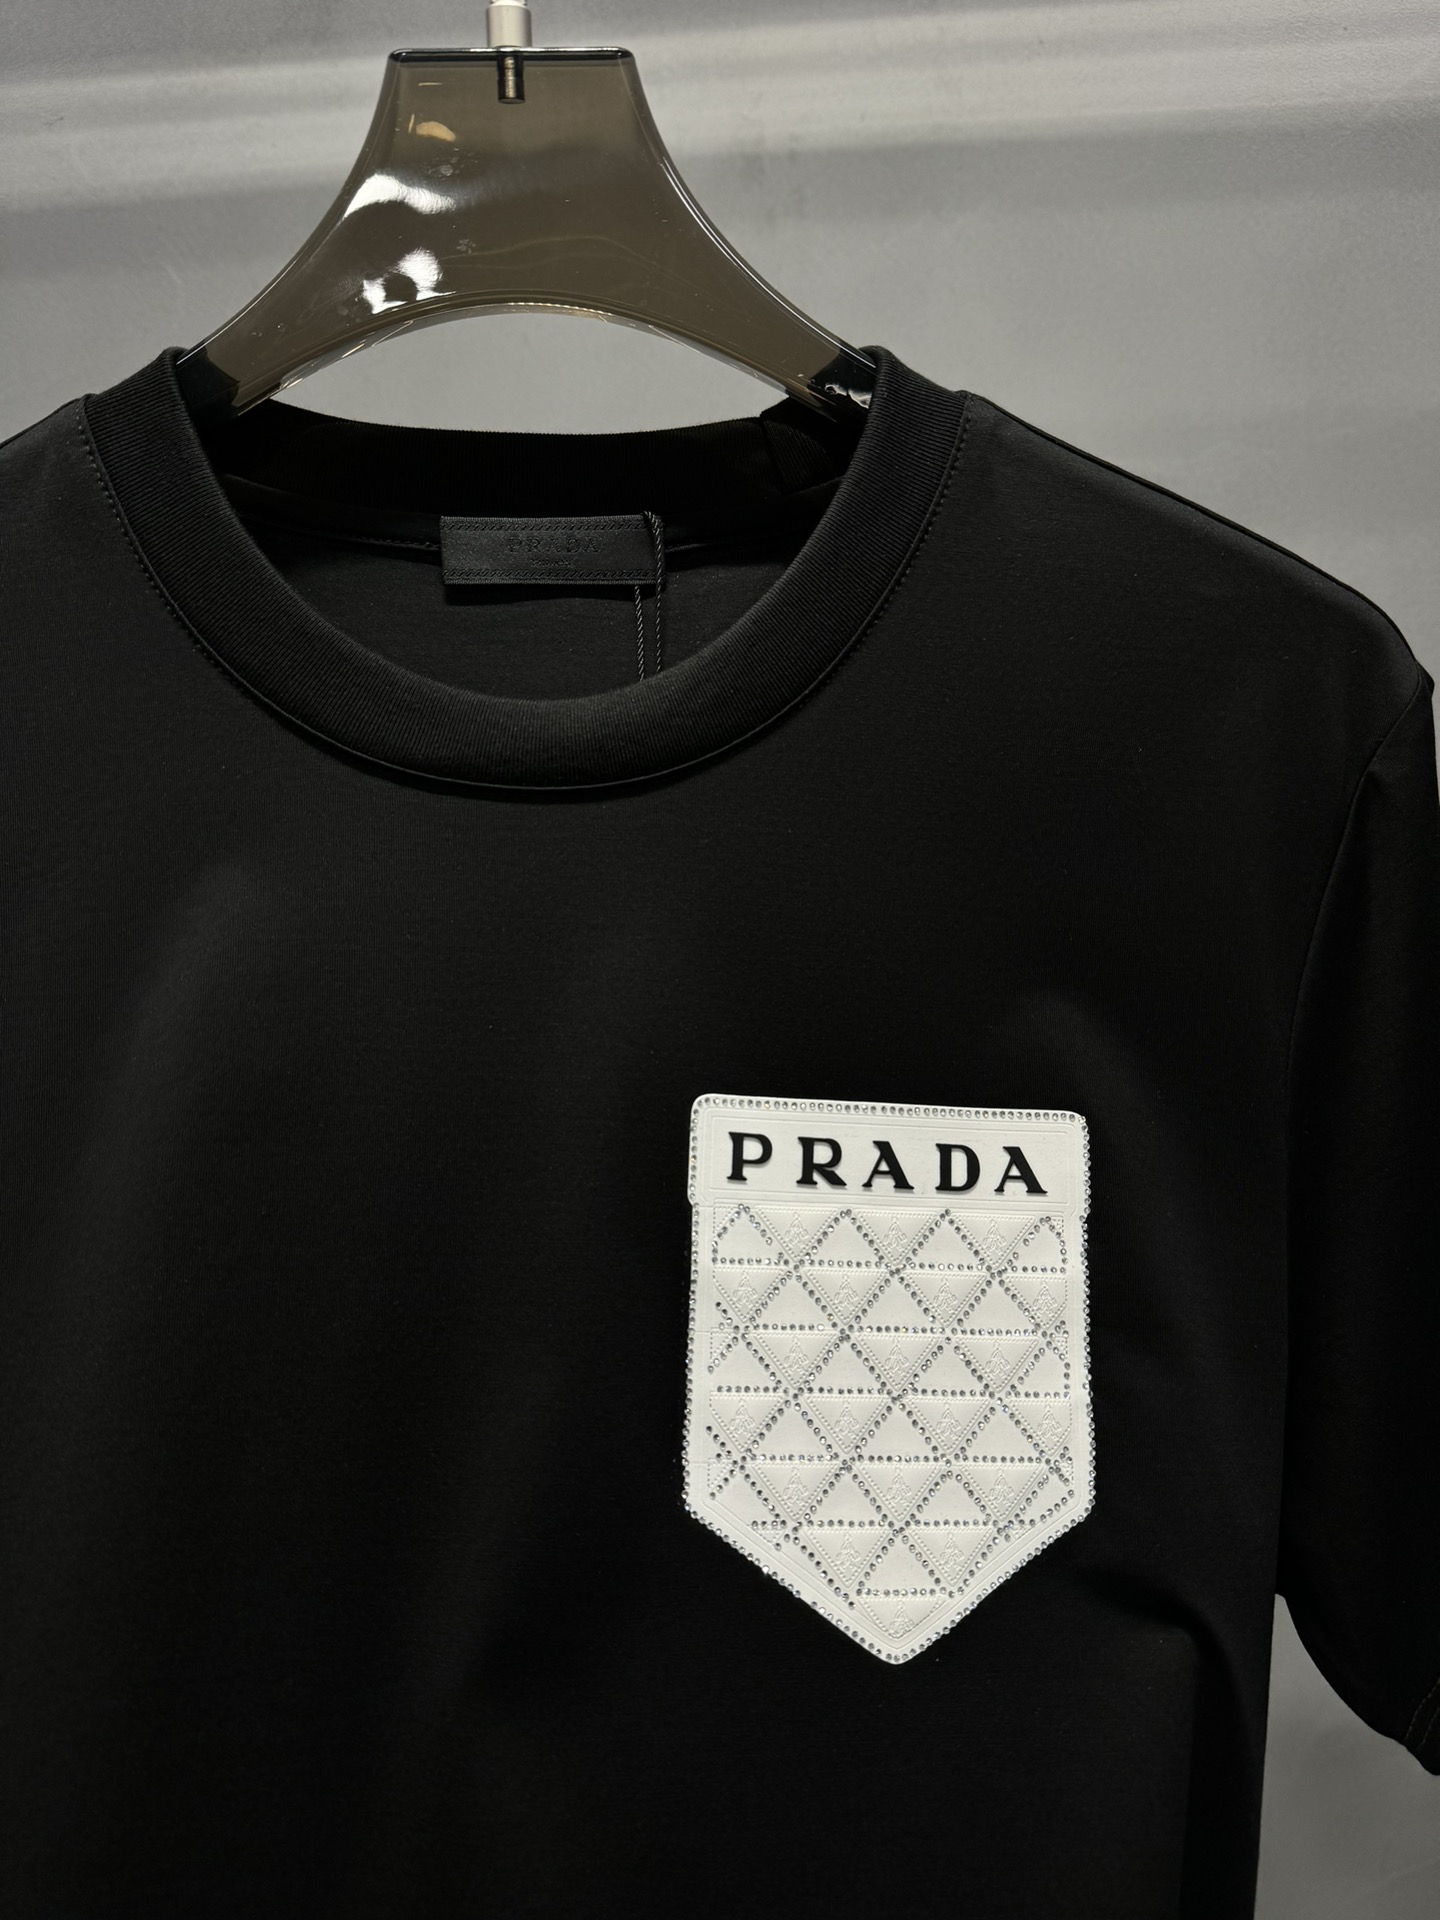 ️PRAD*普拉*达24春夏男士圆领短袖.简单高级胸口口袋设计感.凸凹造型经典Prada标识及品牌形象.